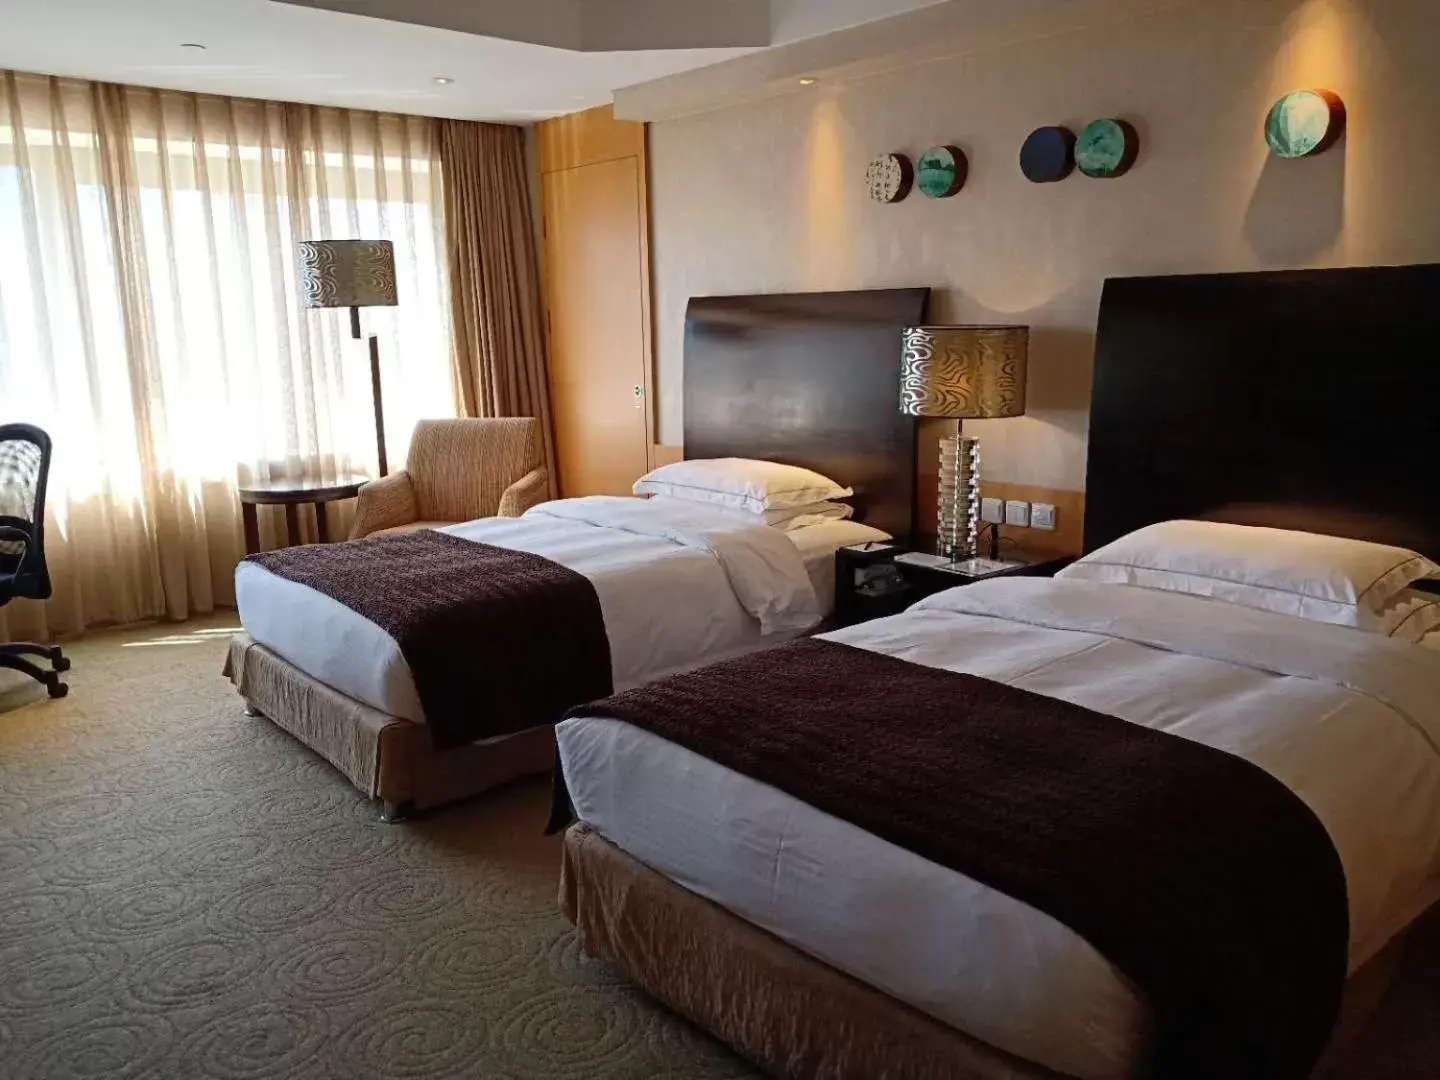 Bedroom, Bed in Marco Polo Parkside, Beijing